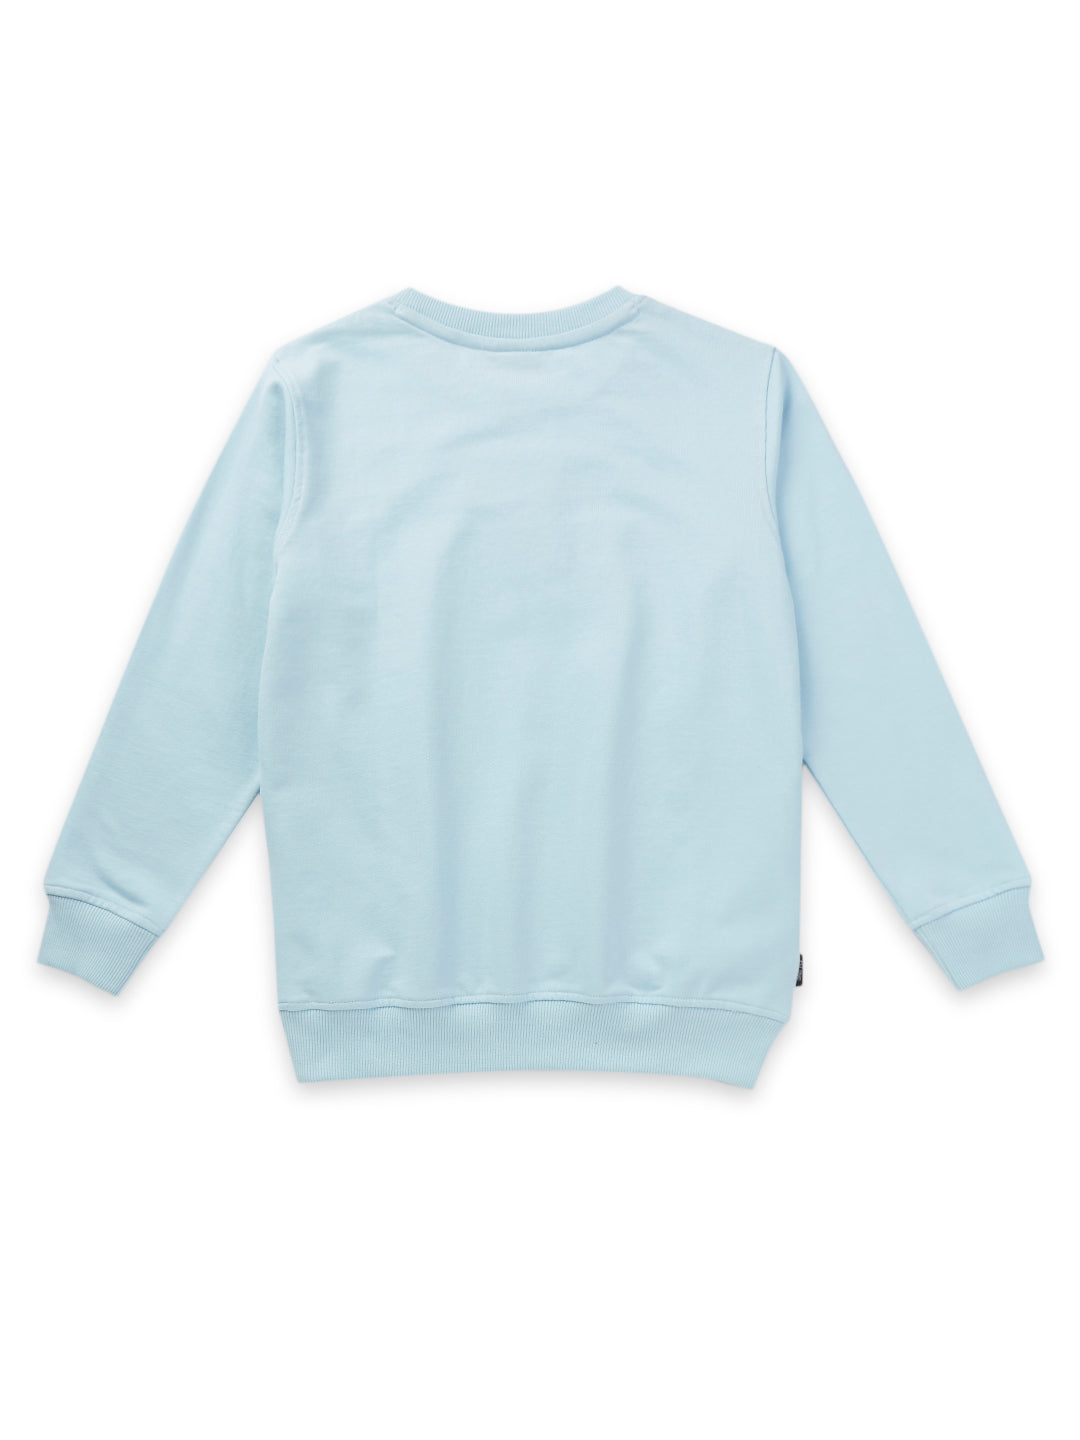 Boys Blue Printed Fleece Sweat Shirt